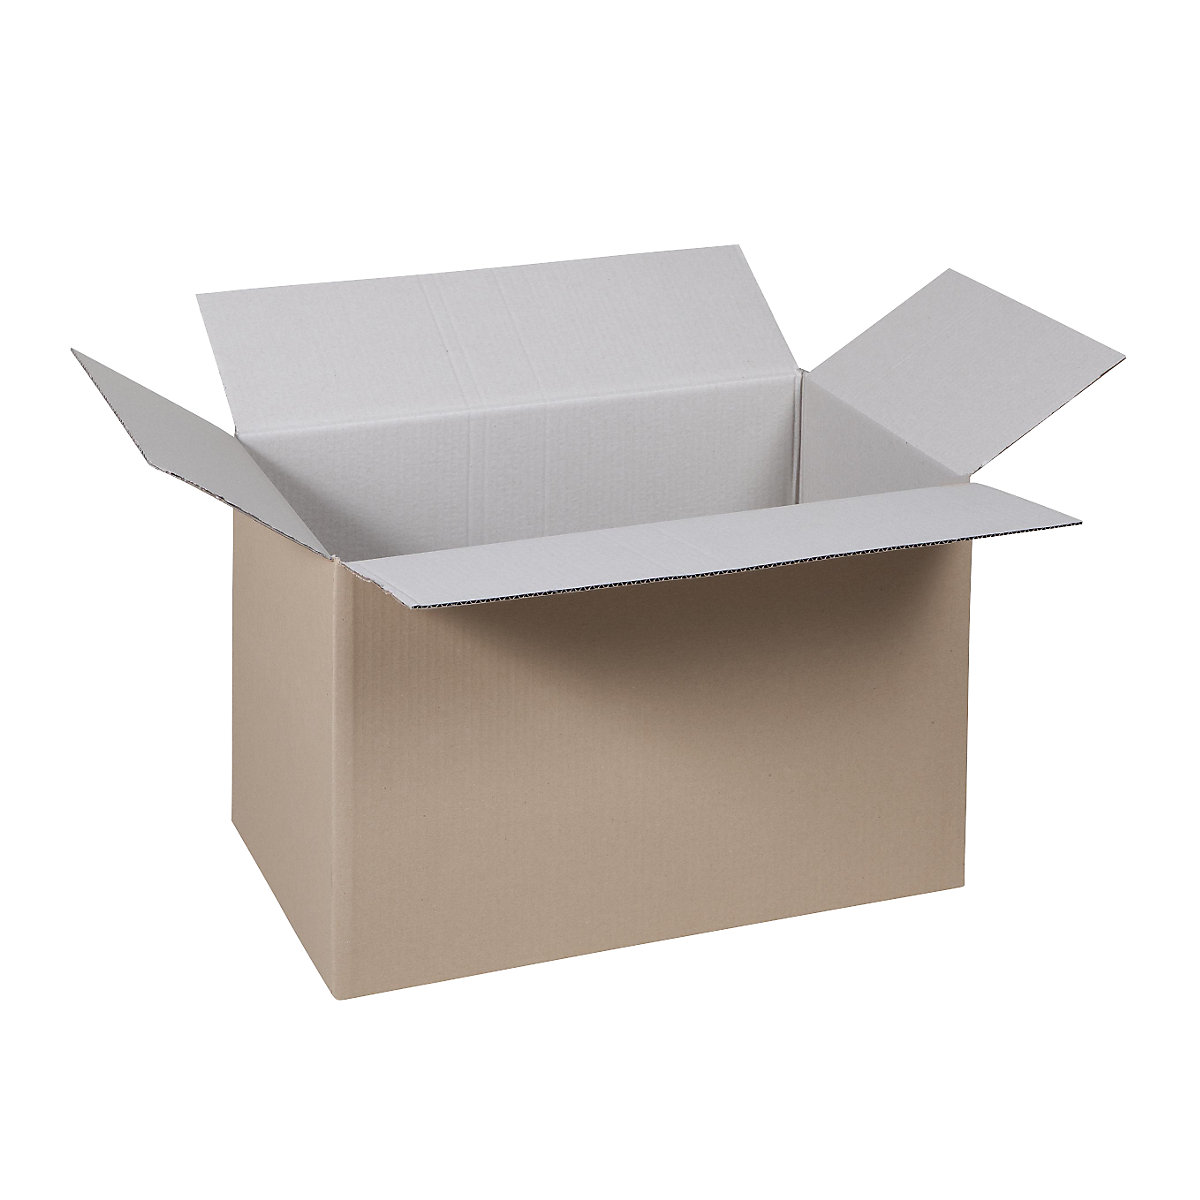 Folding cardboard box, FEFCO 0201, made of single fluted cardboard, internal dimensions 600 x 400 x 360 mm, pack of 50-31